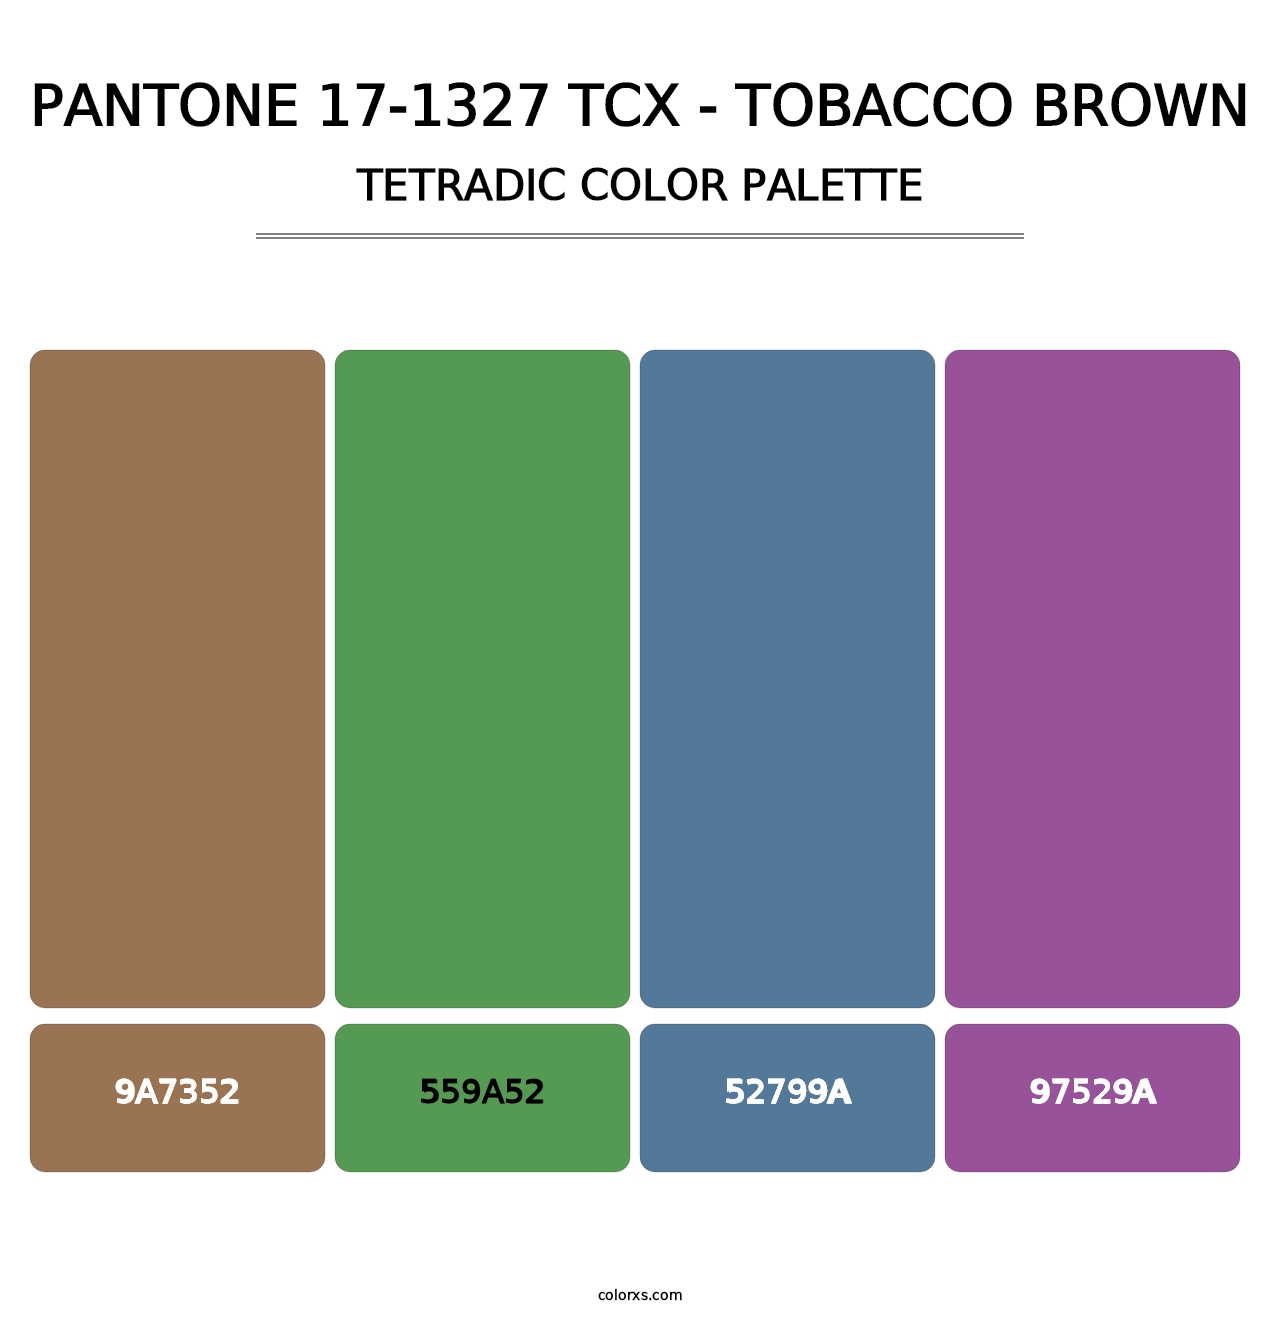 PANTONE 17-1327 TCX - Tobacco Brown - Tetradic Color Palette